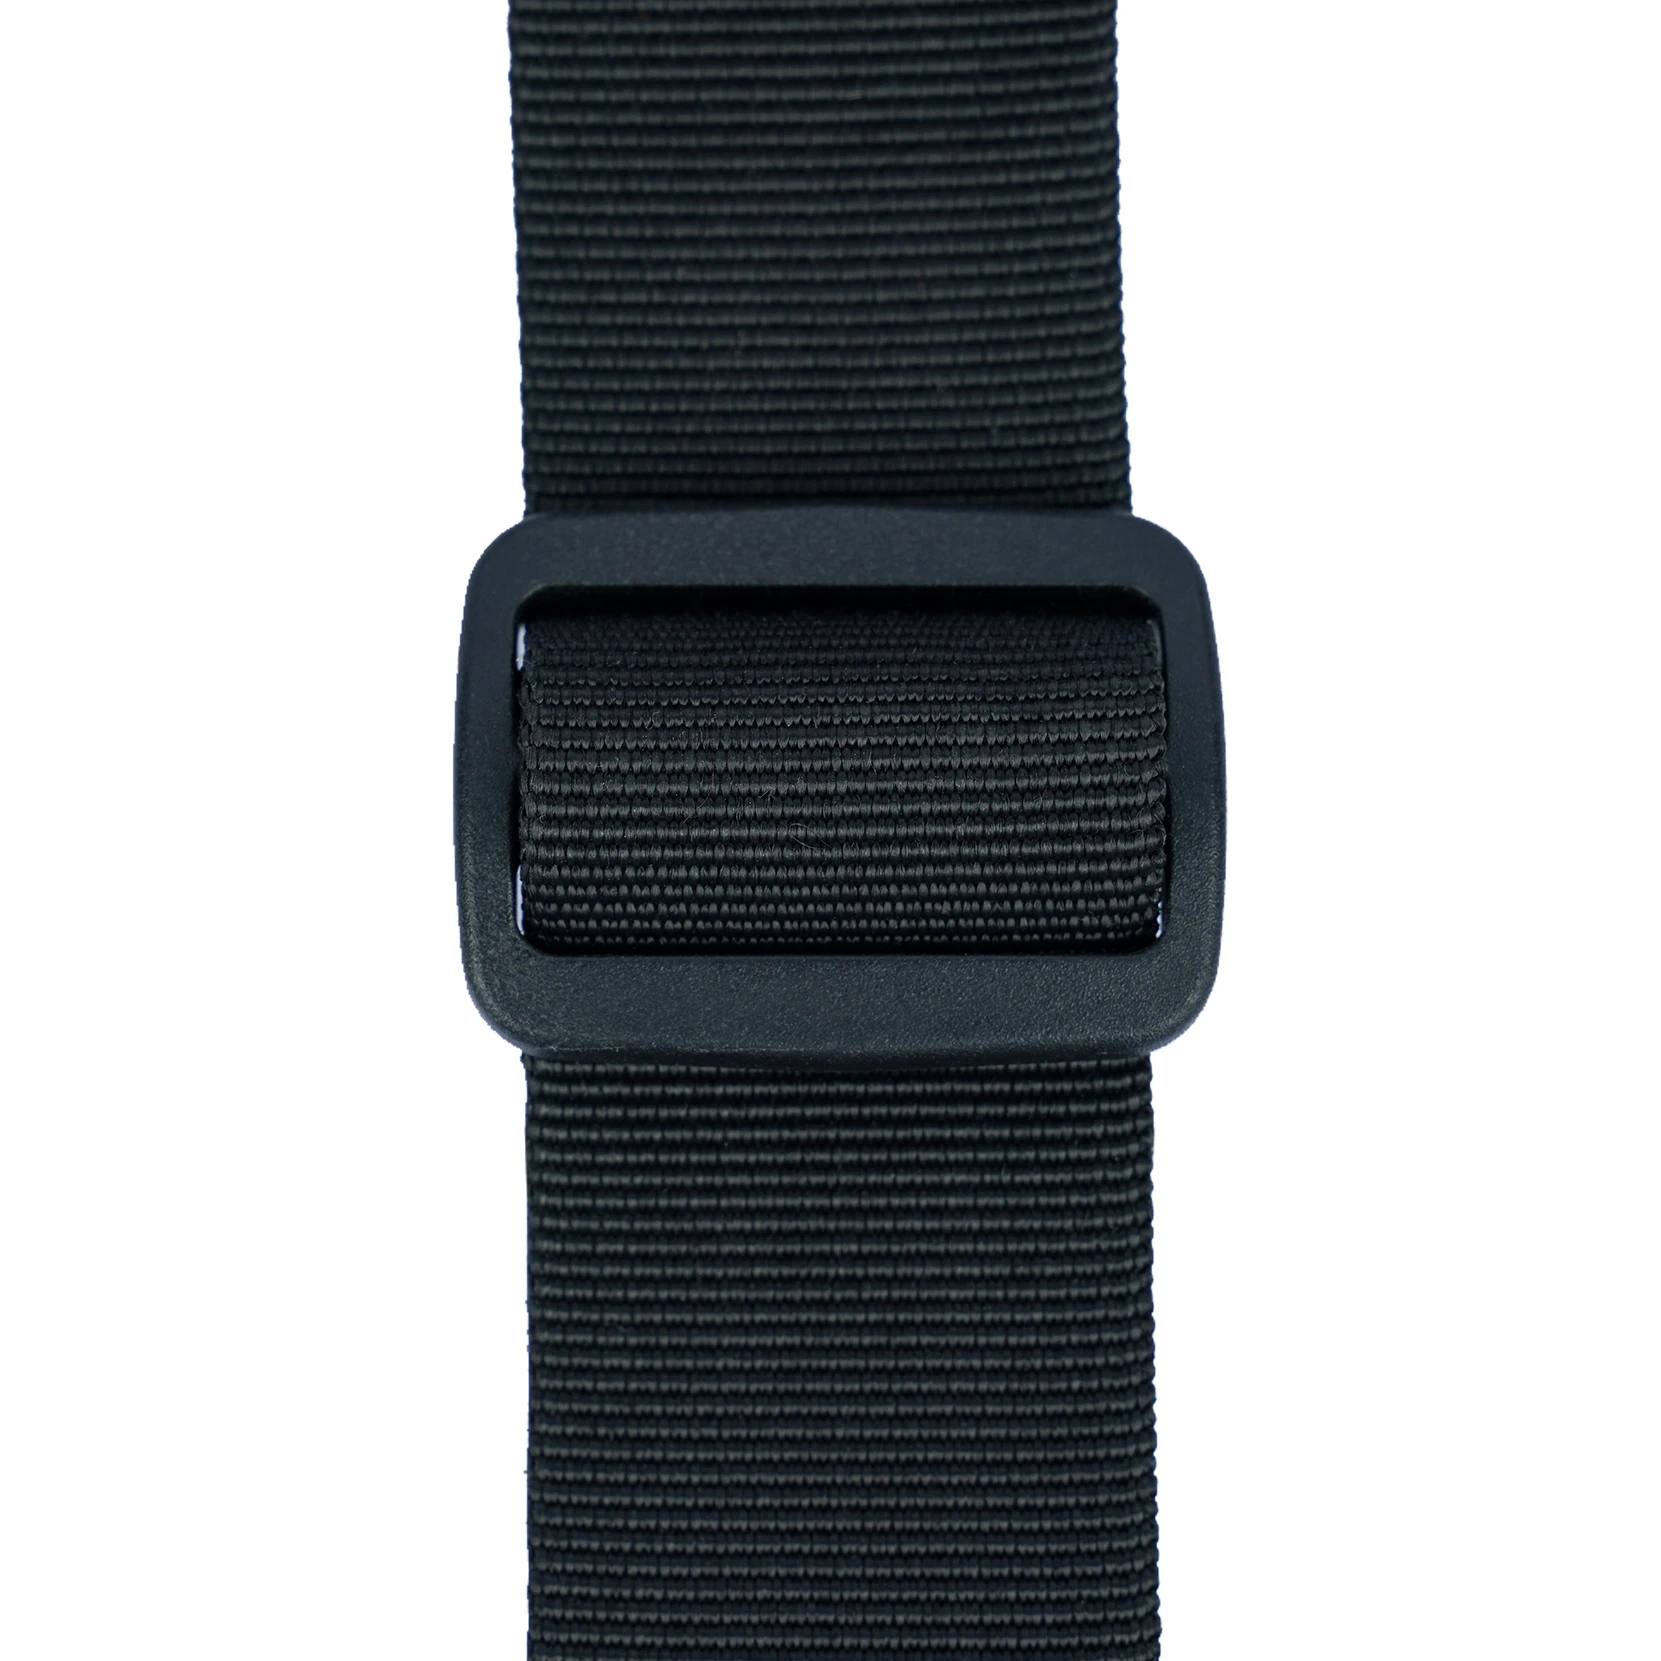 MELOTOUGH Tactical Suspenders Duty Belt Harness Padded Adjustable